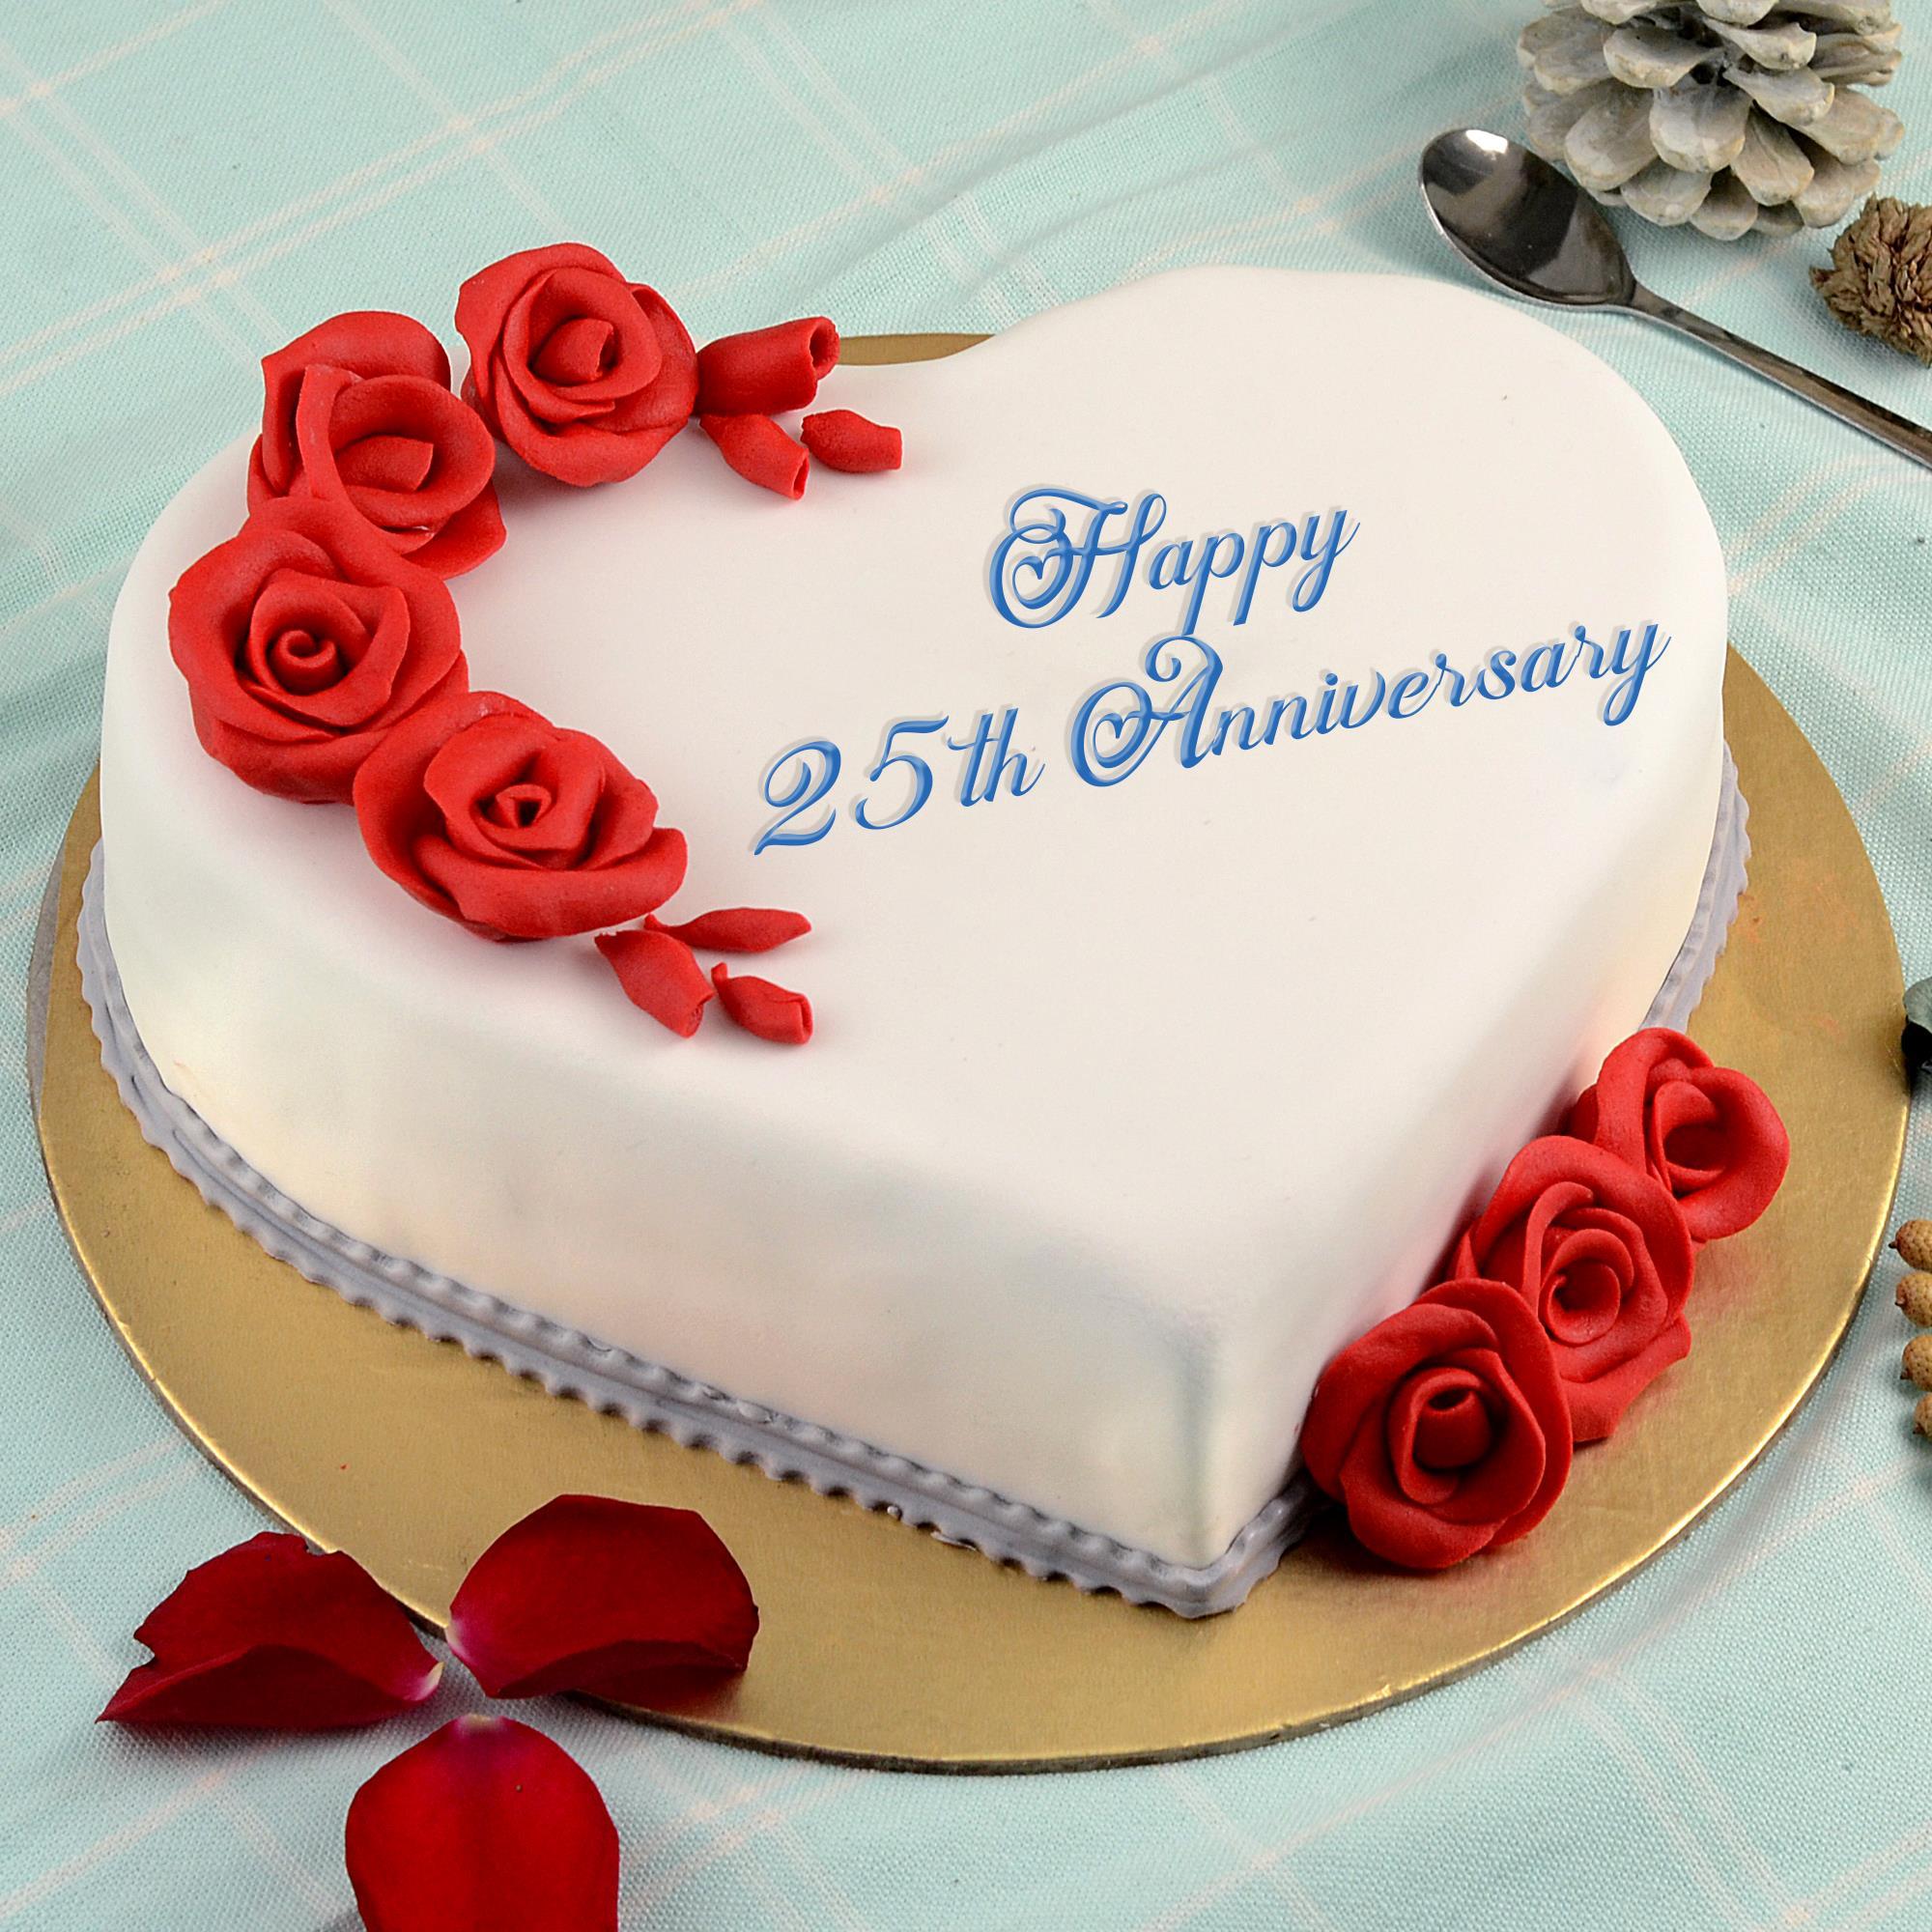 4 anniversary cake by Diva161 on DeviantArt